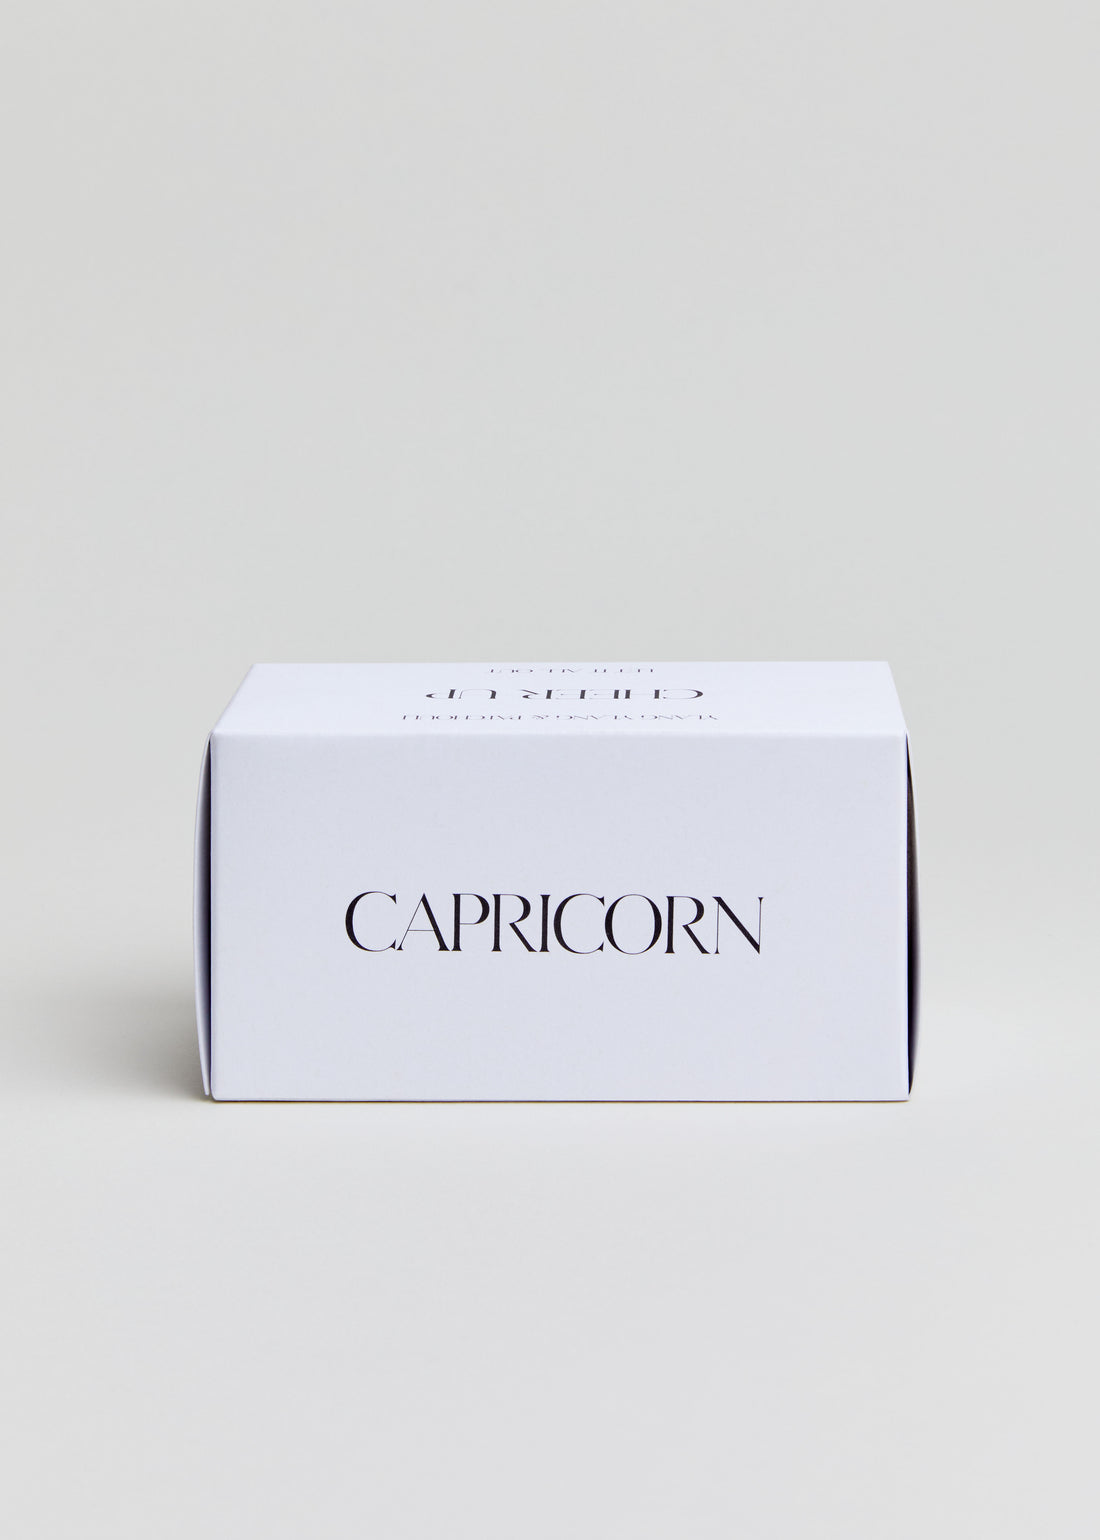 Capricorn Soap Bar